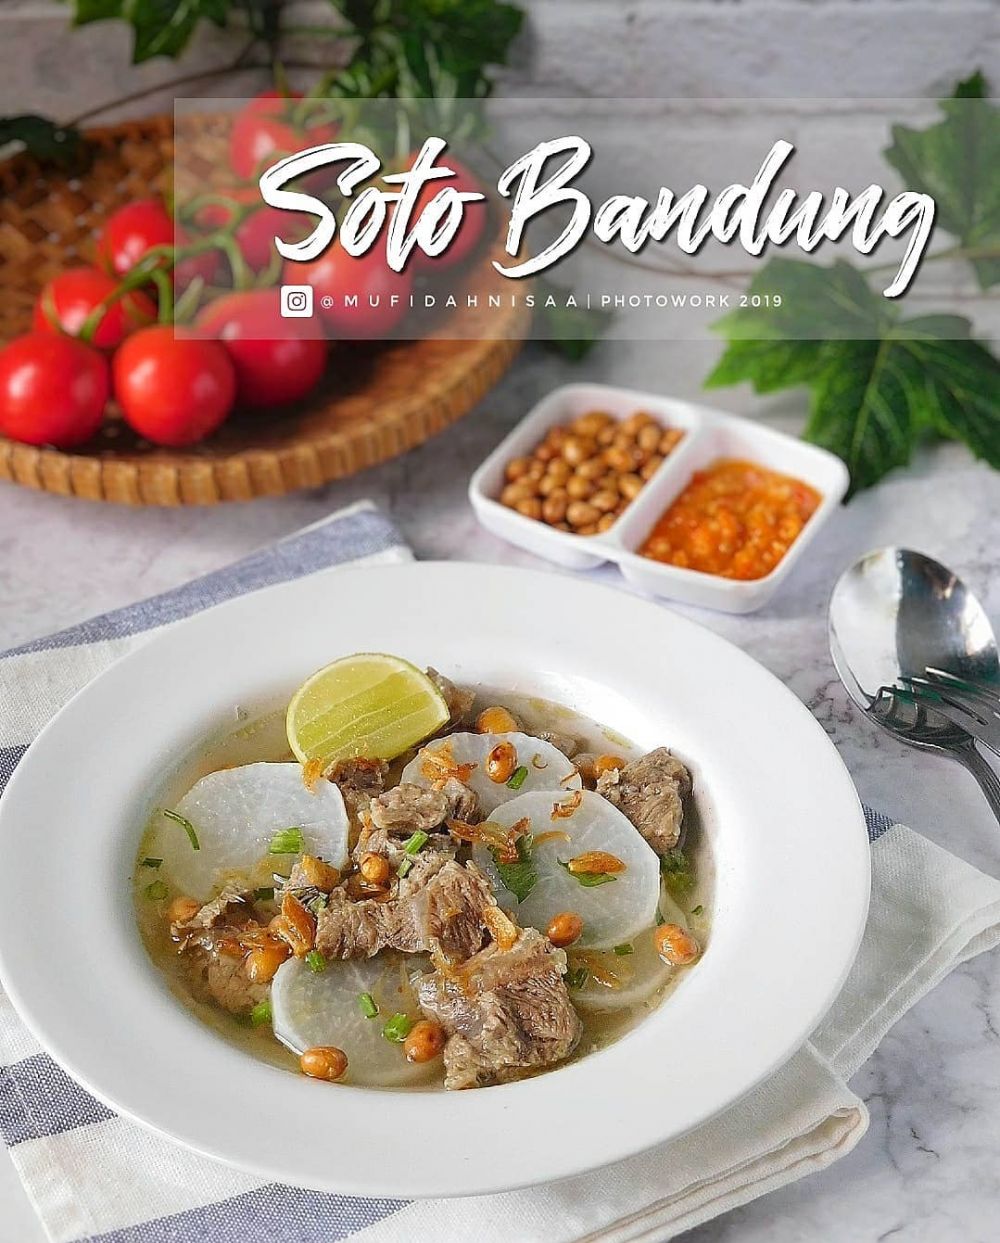 13 Resep makanan khas Bandung, populer, enak, dan mudah dibuat